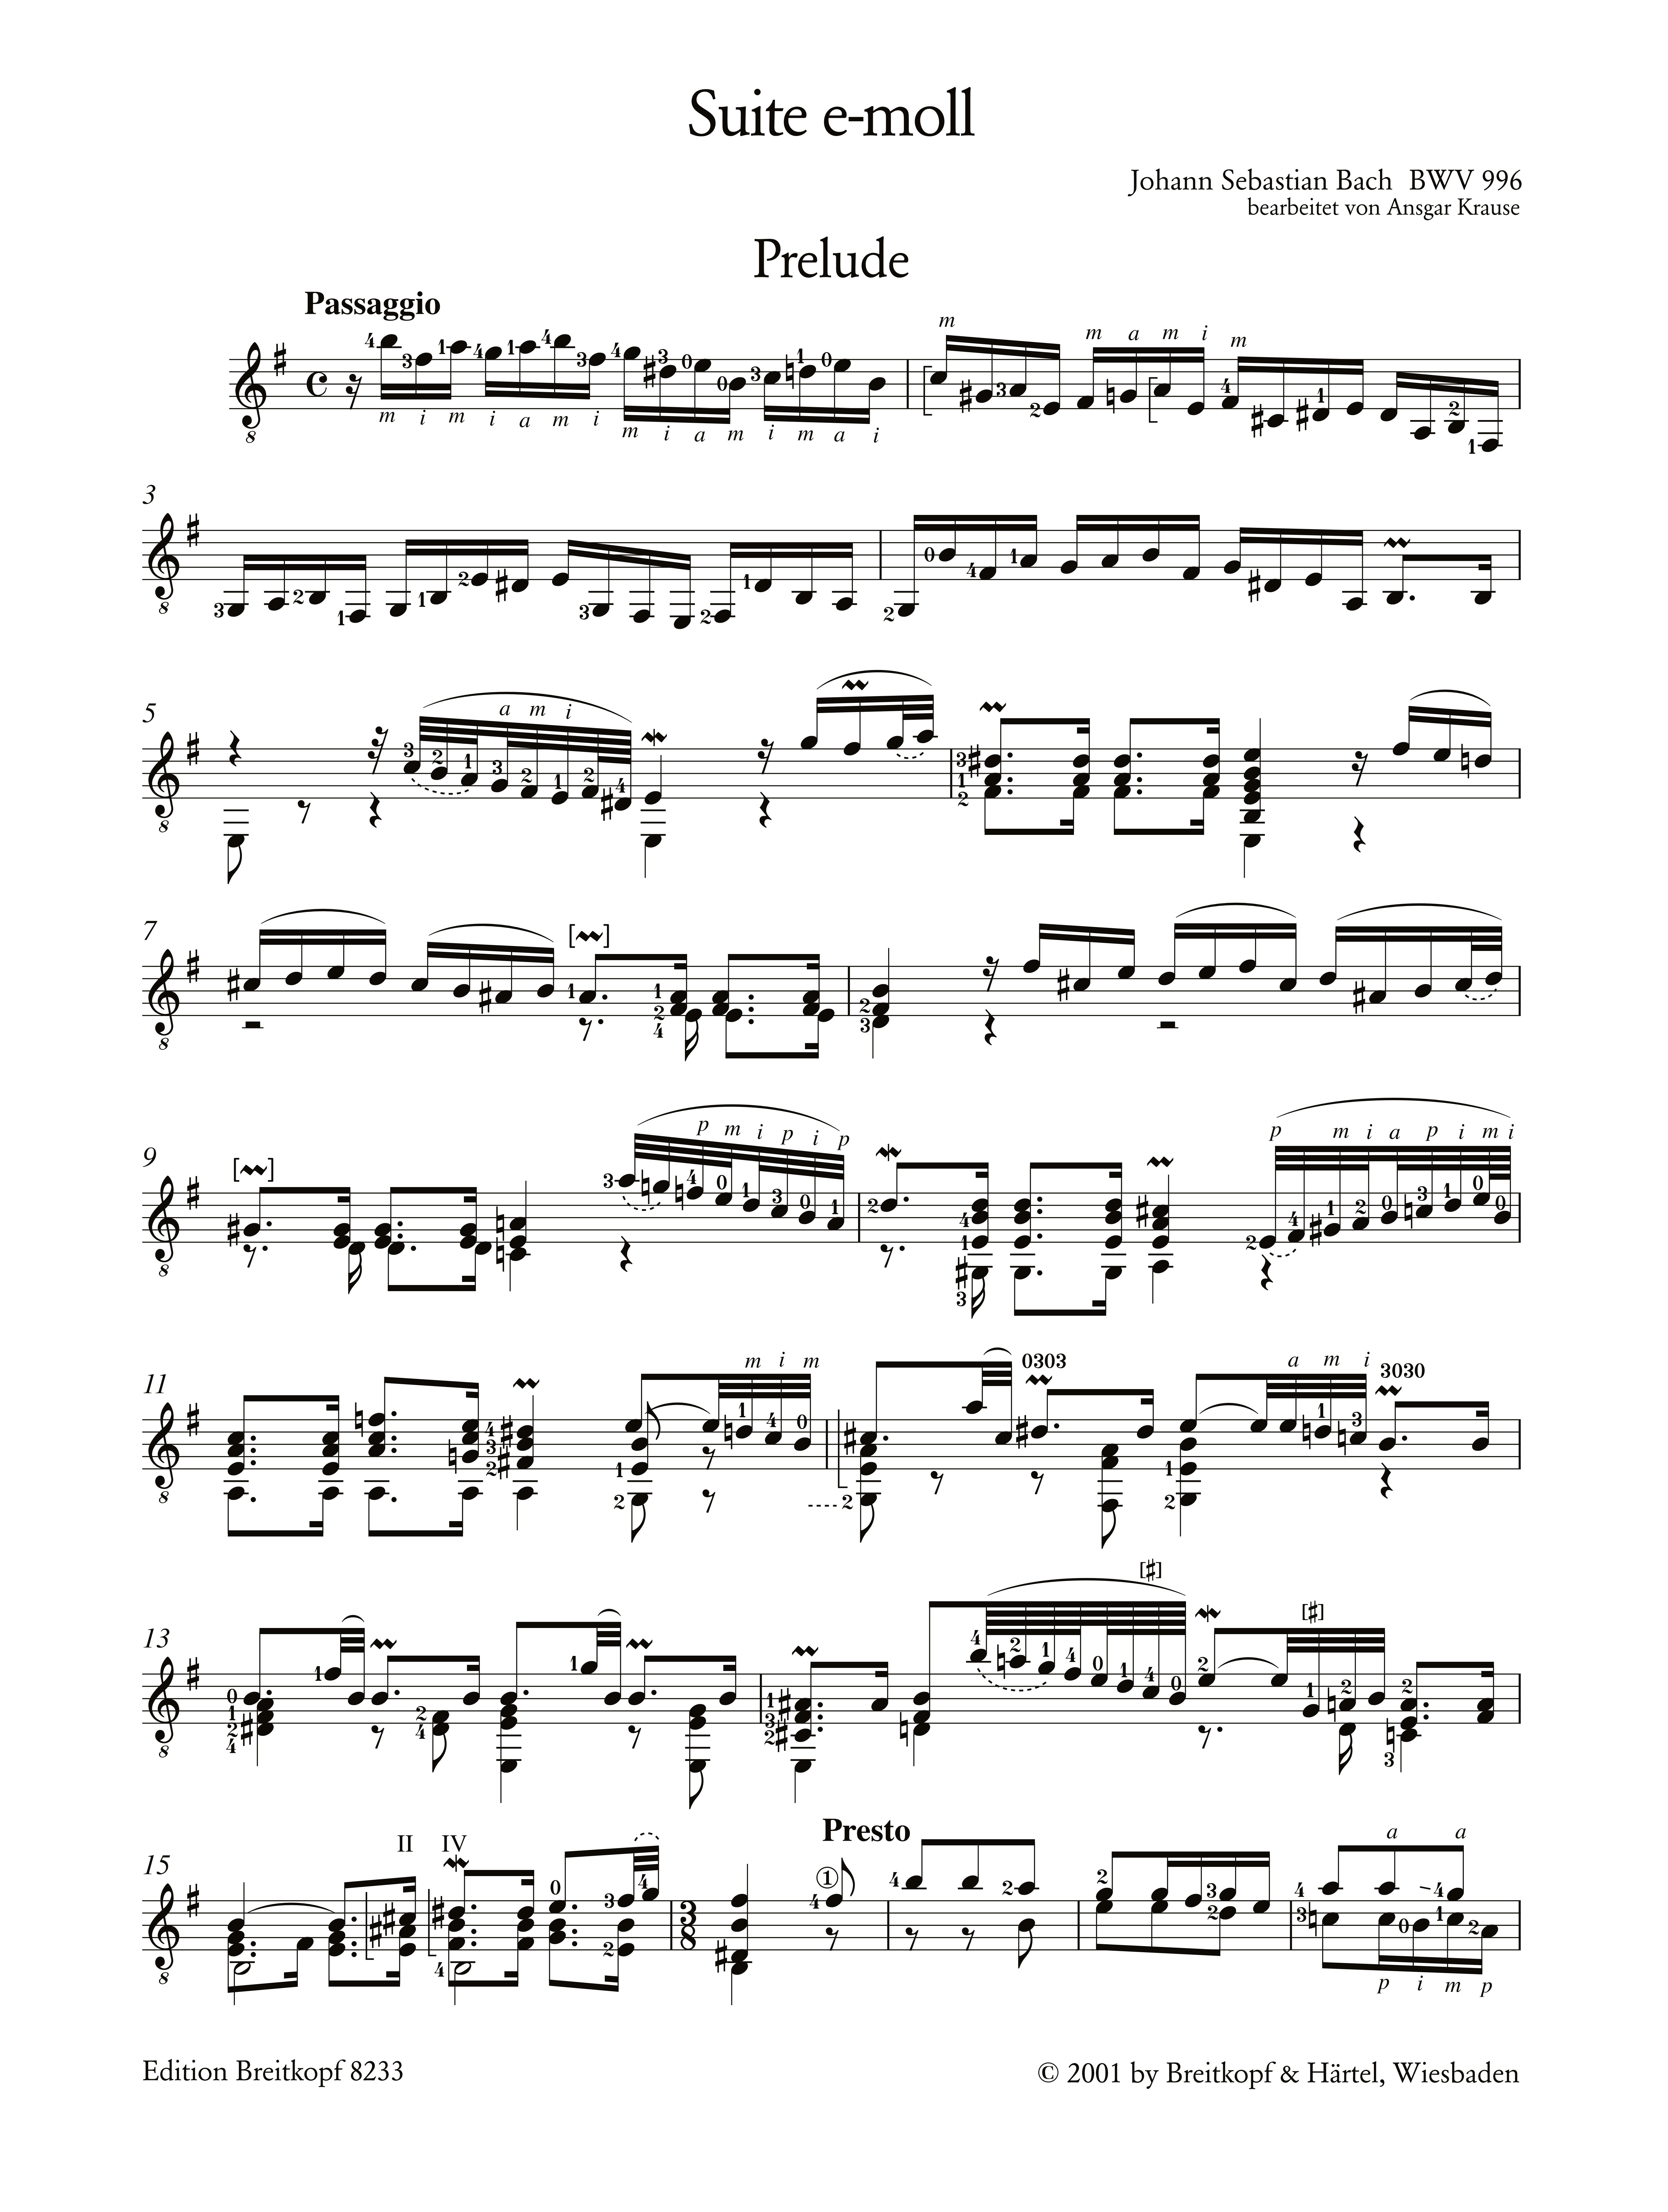 Suite e-Moll BWV996 